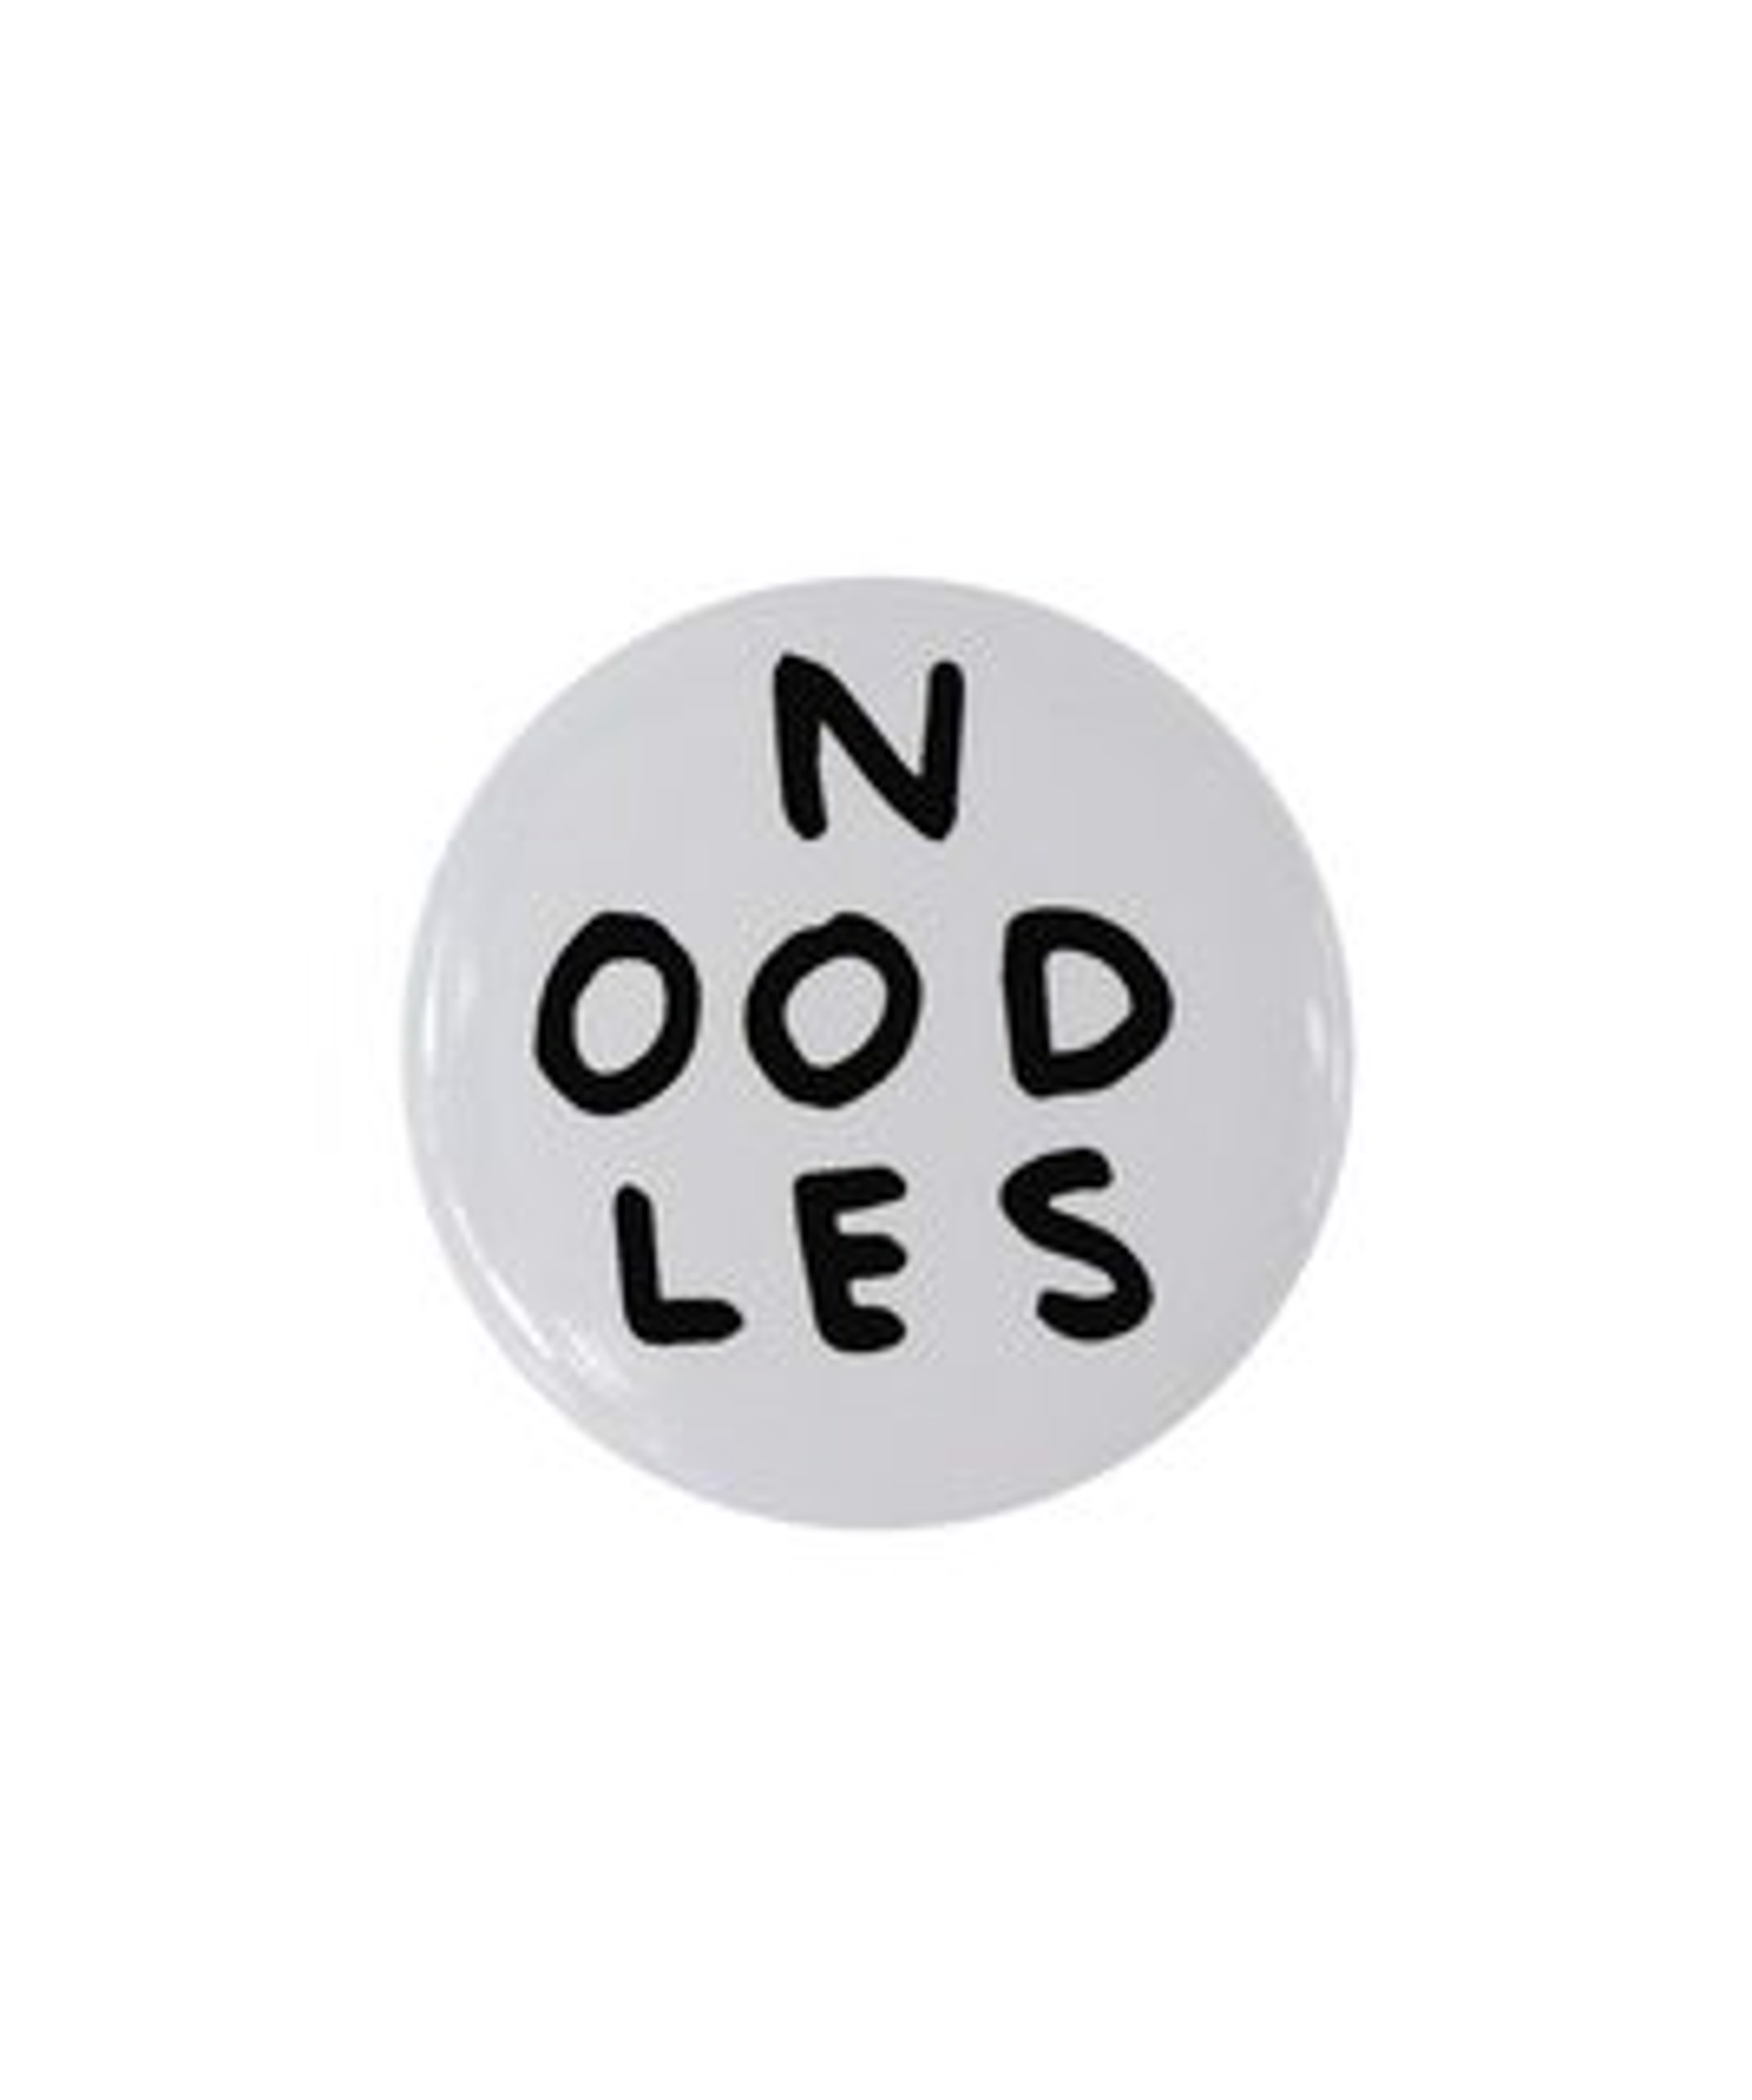 Noodles Pin Badge by David Shrigley